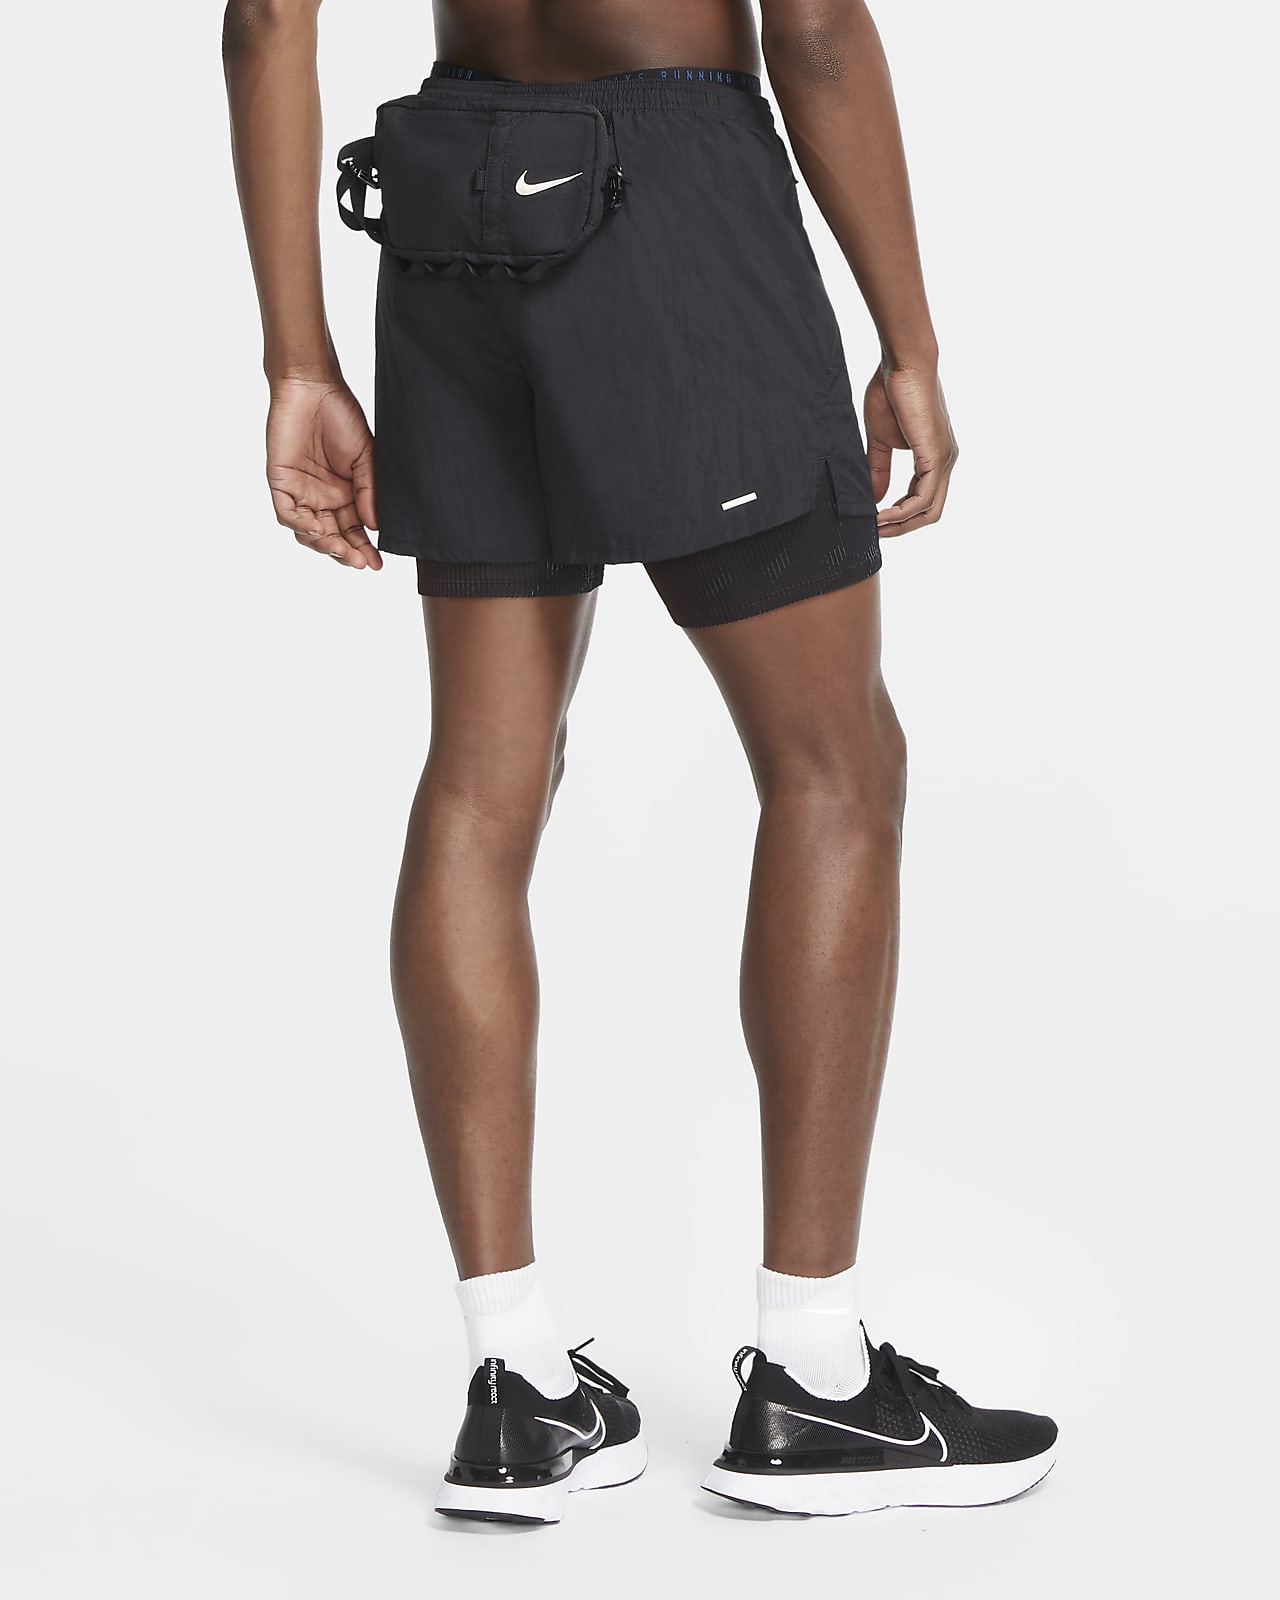 Mens Nike 3-In-1 Pinnacle Running Shorts